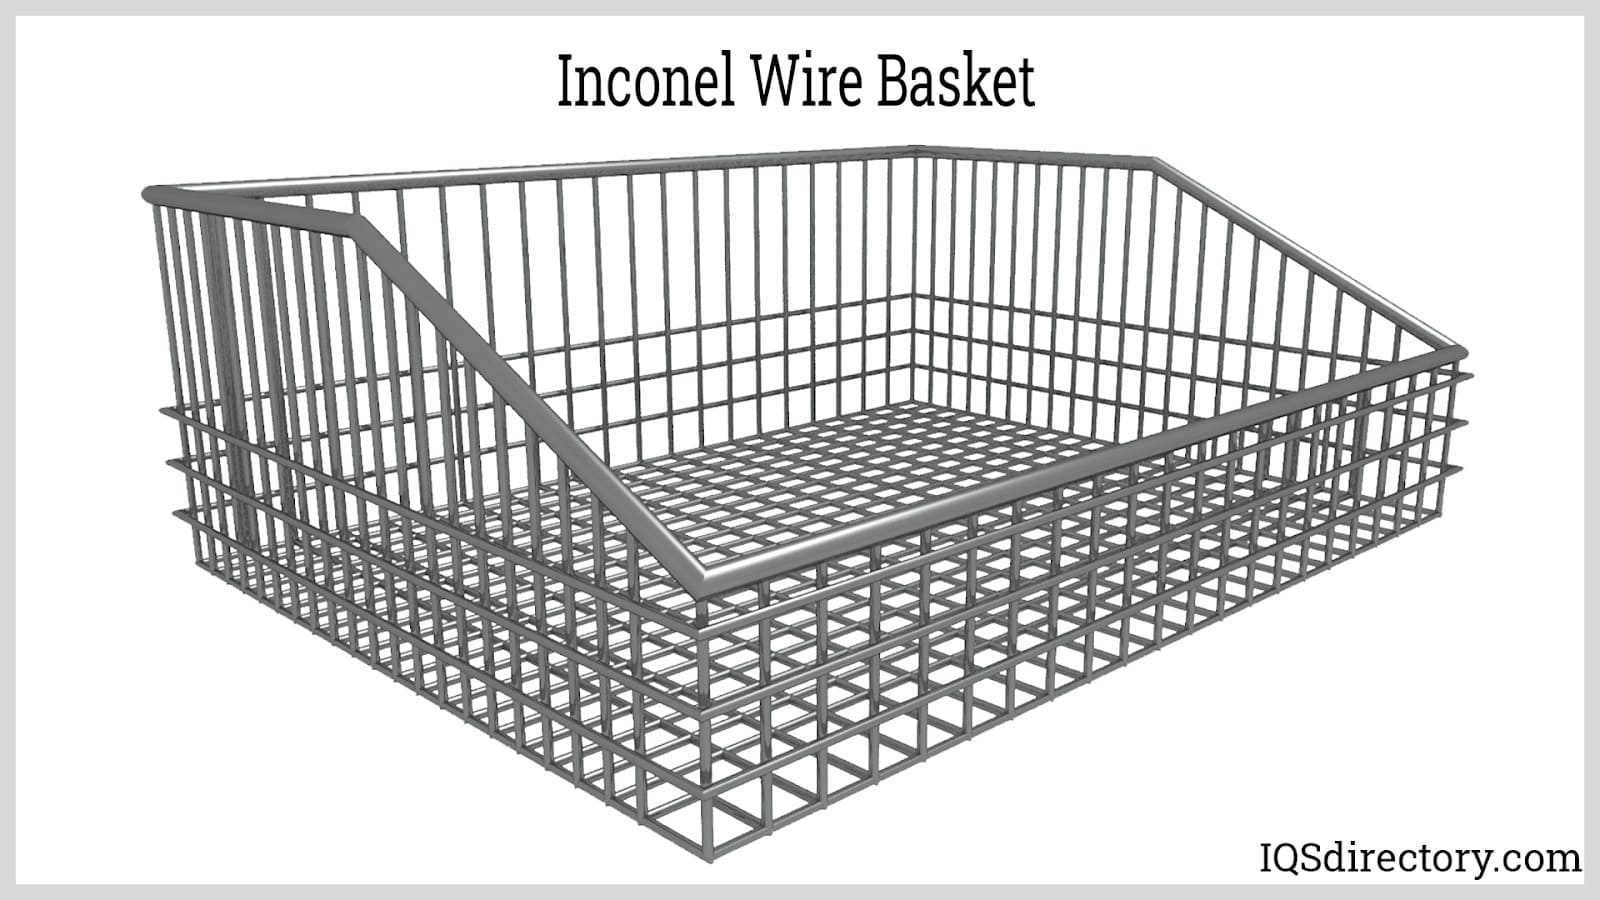  Inconel Wire Basket